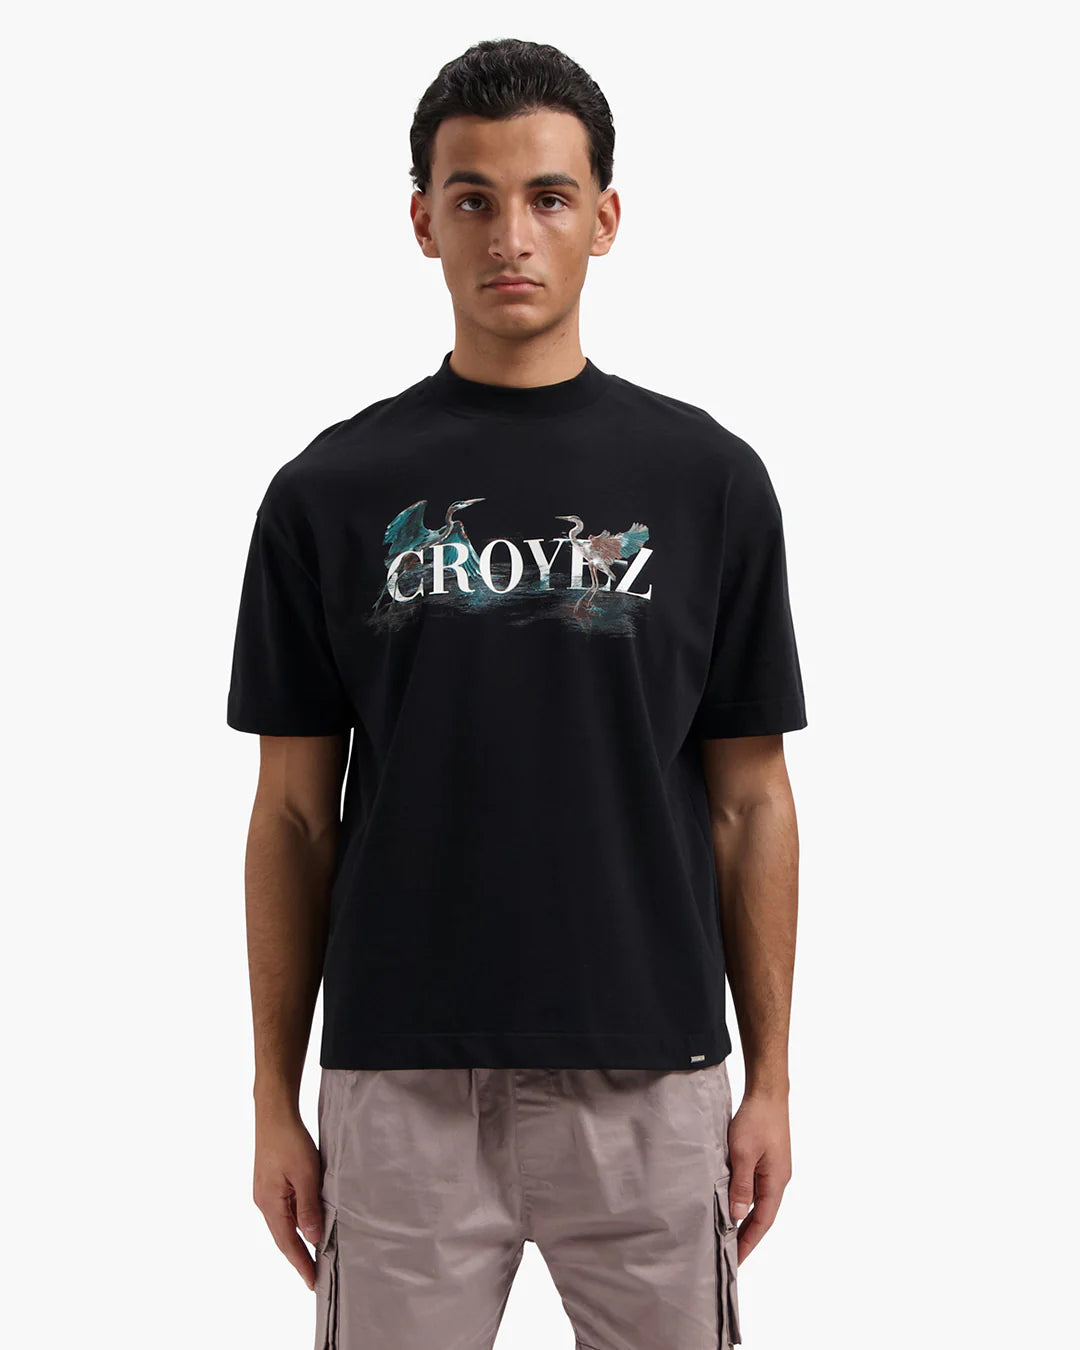 Croyez blue heron t-shirt - black